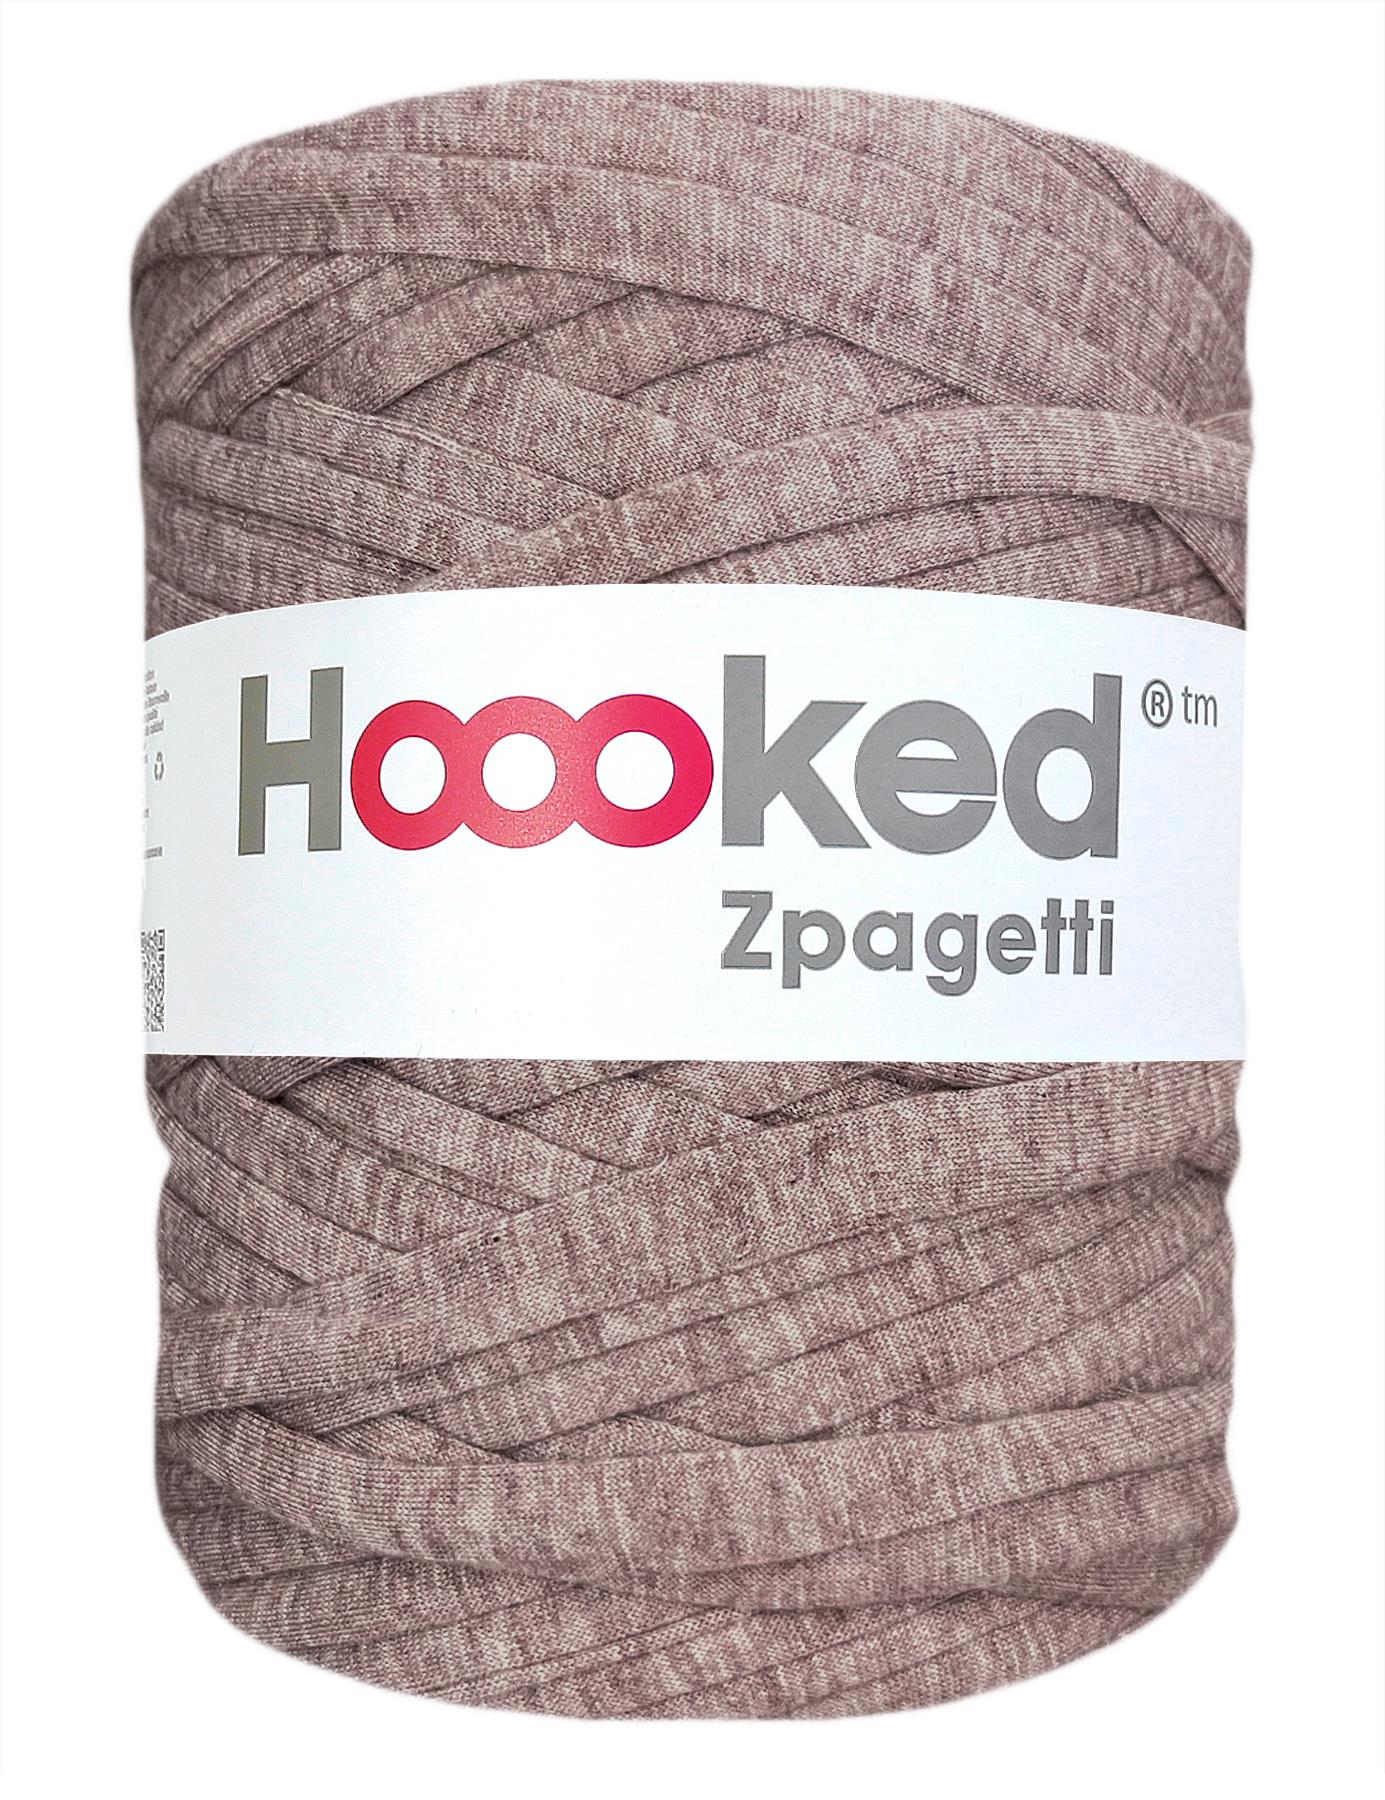 Very faded purple t-shirt yarn by Hoooked Zpagetti (100-120m)